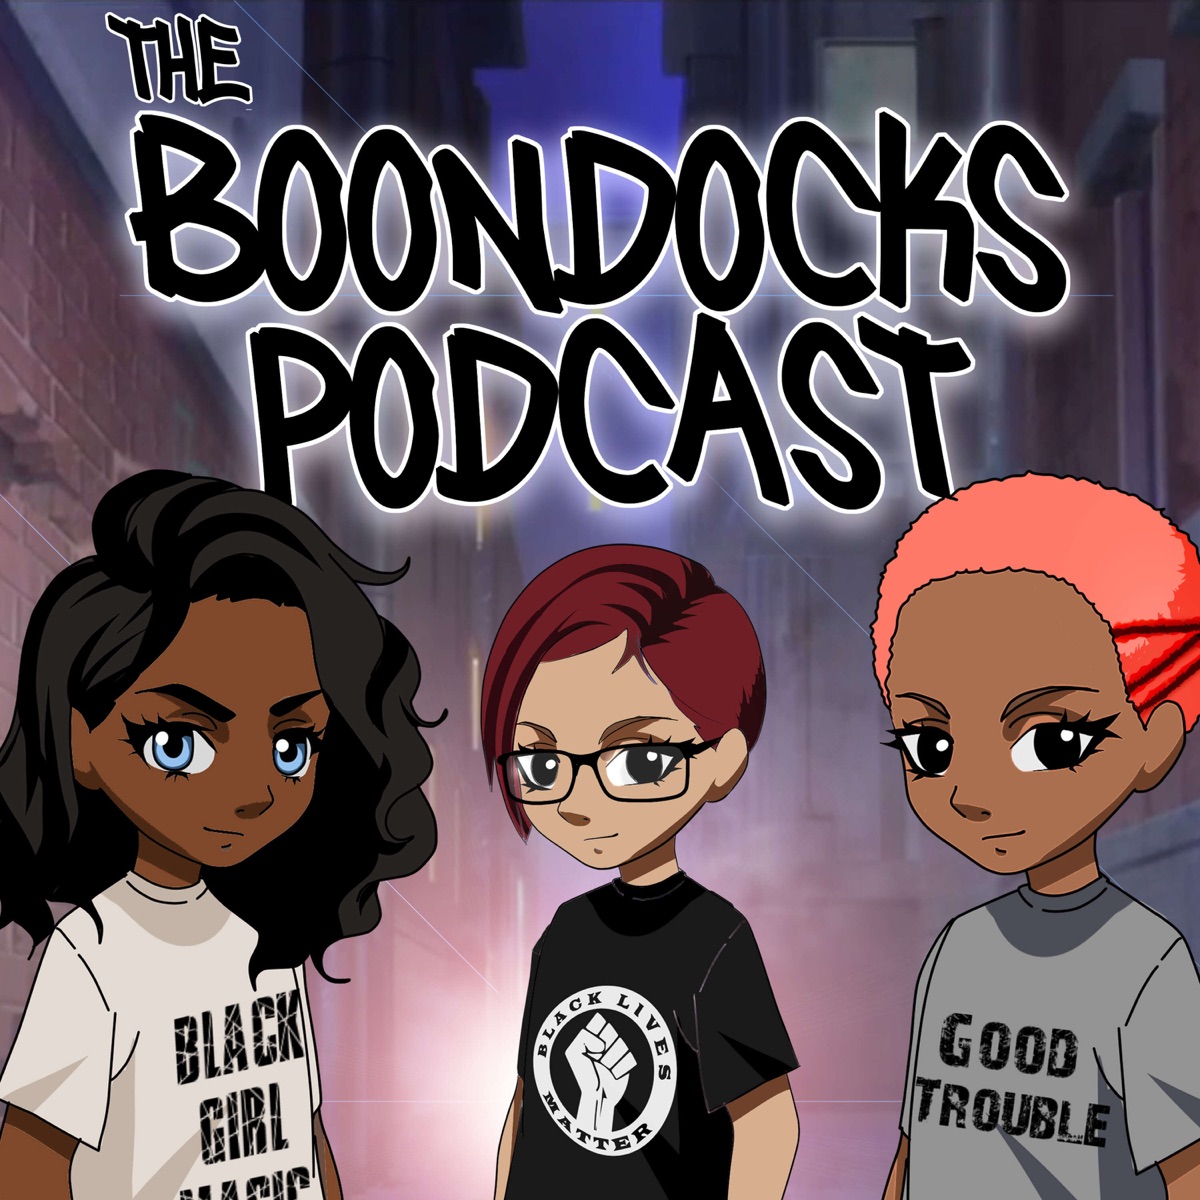 The Boondocks Podcast – Podcast